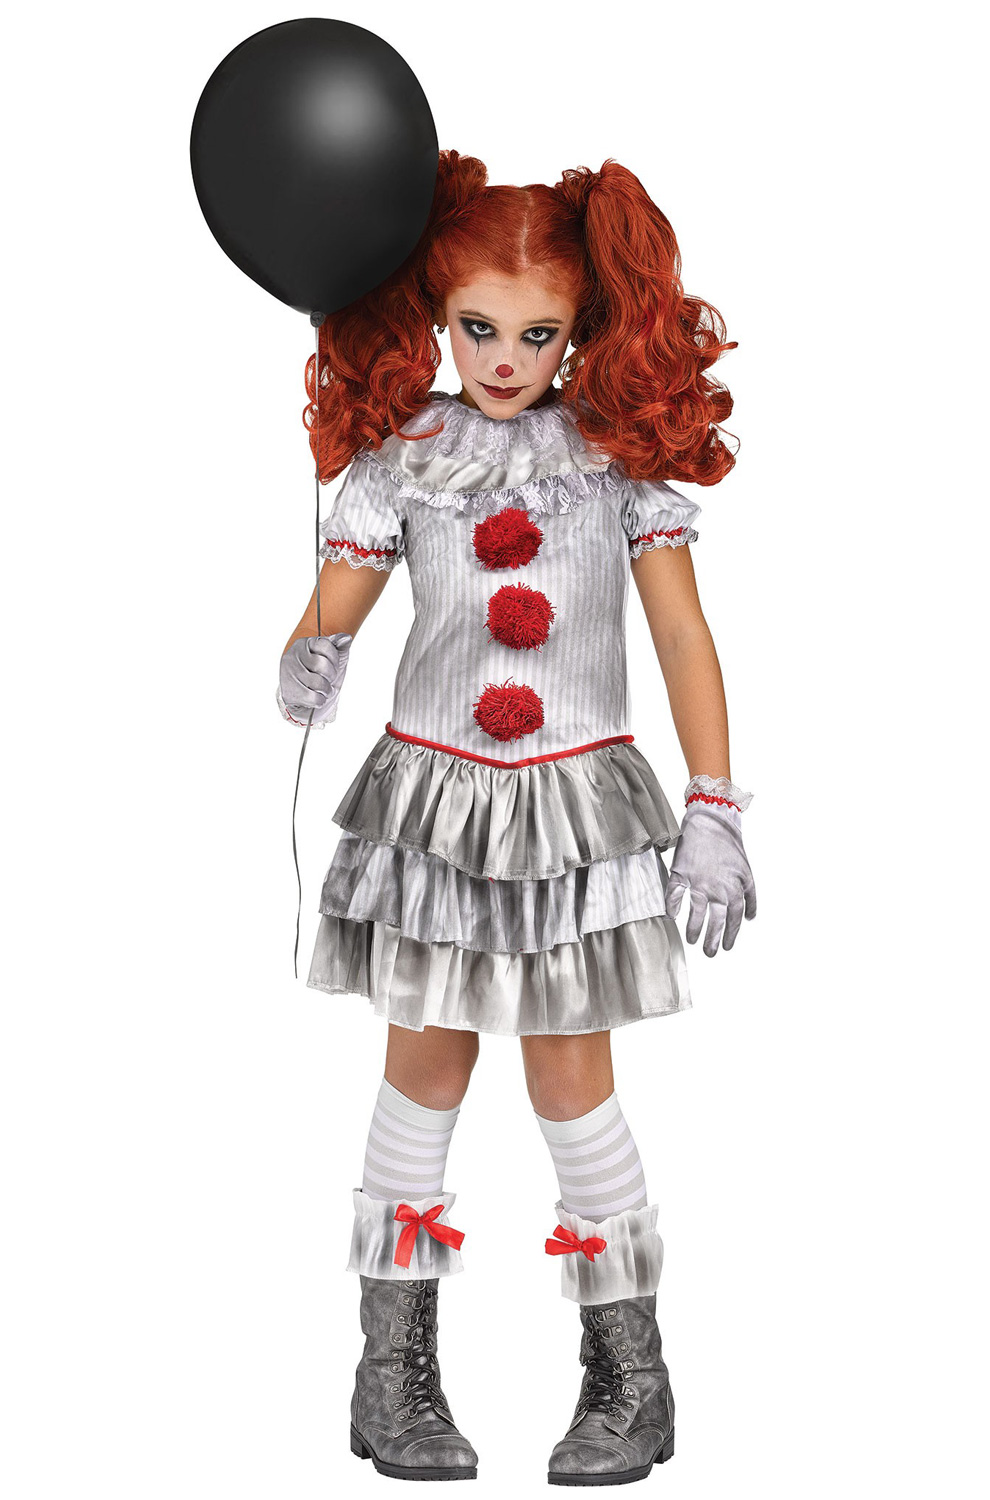 FunWorld Costumes Child's Girl's Carn-Evil Carnival Clown Costume Medium 8-10 - image 1 of 2